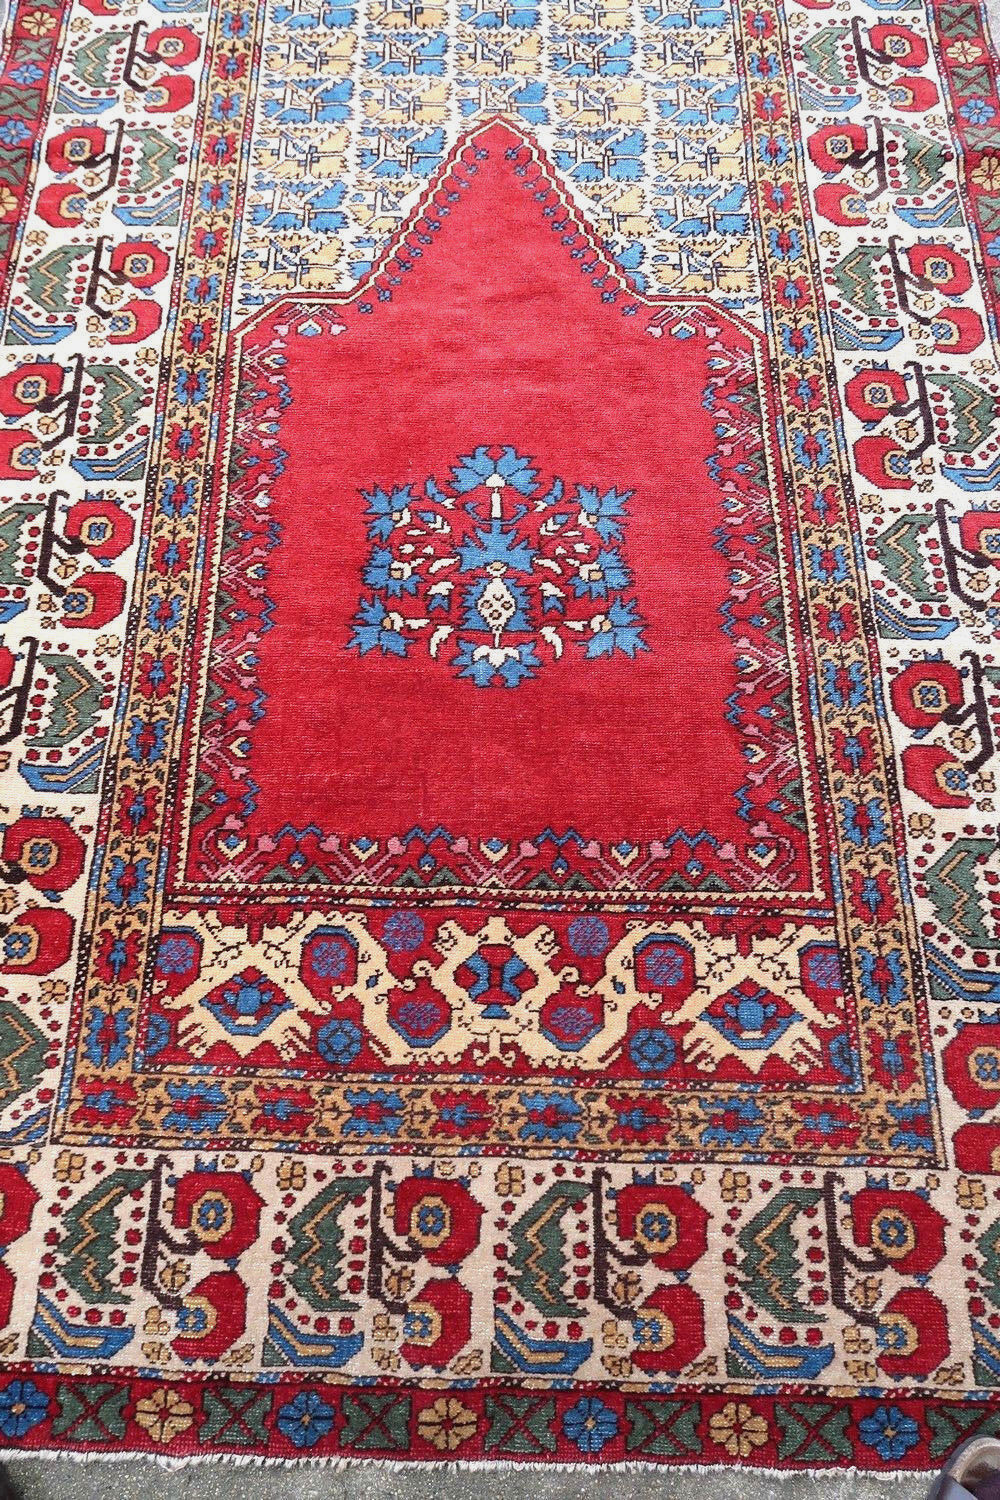 Handmade antique collectible Turkish Transylvania rug 1880s